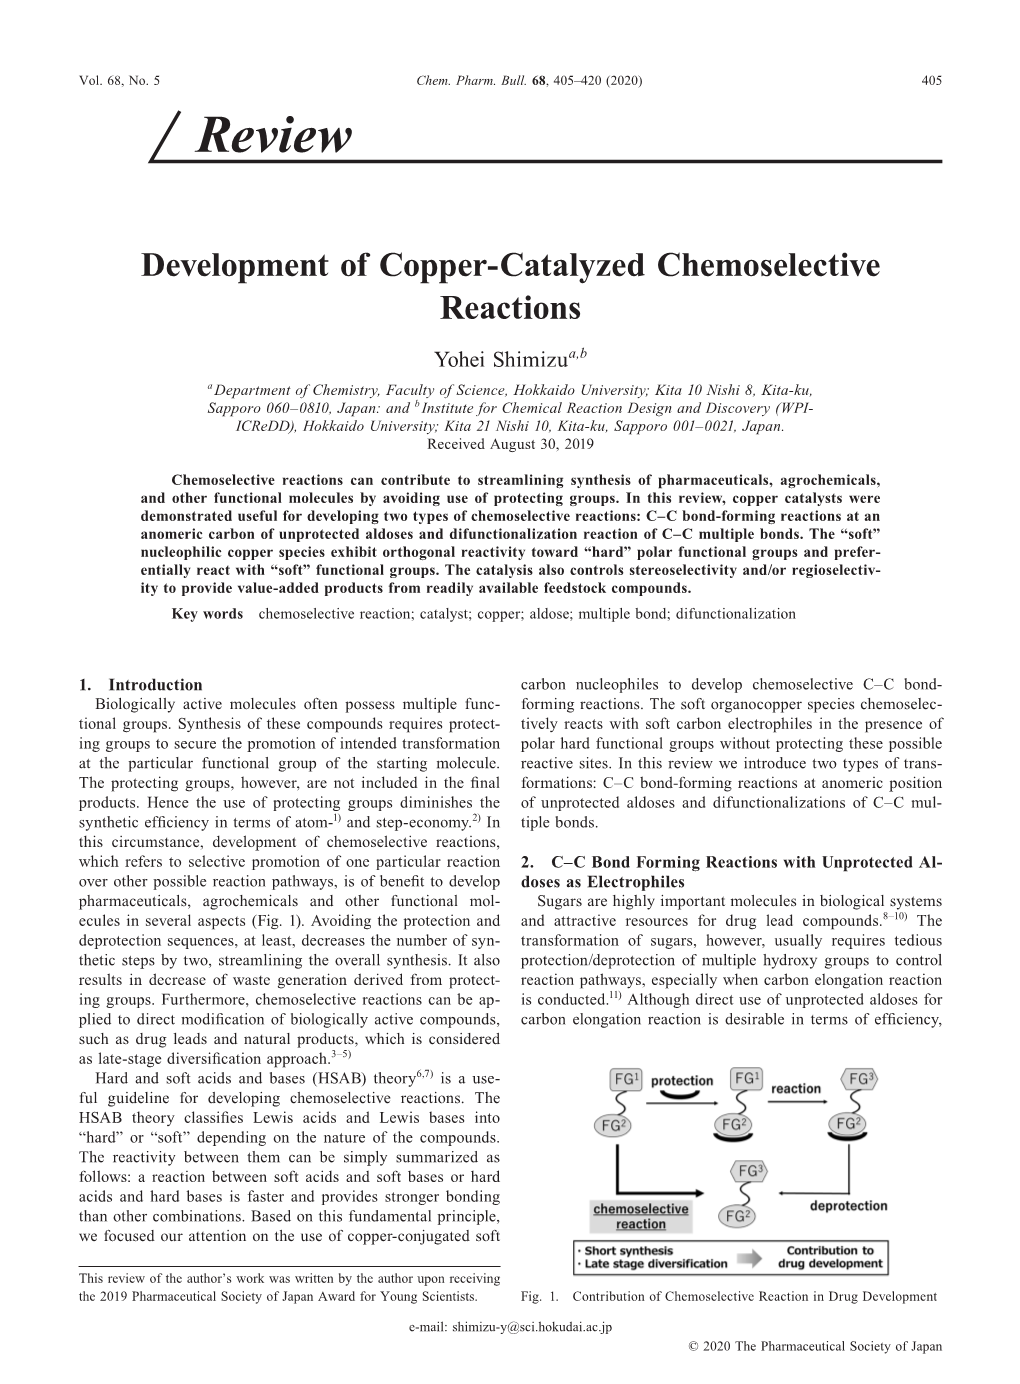 Development of Copper-Catalyzed Chemoselective Reactions